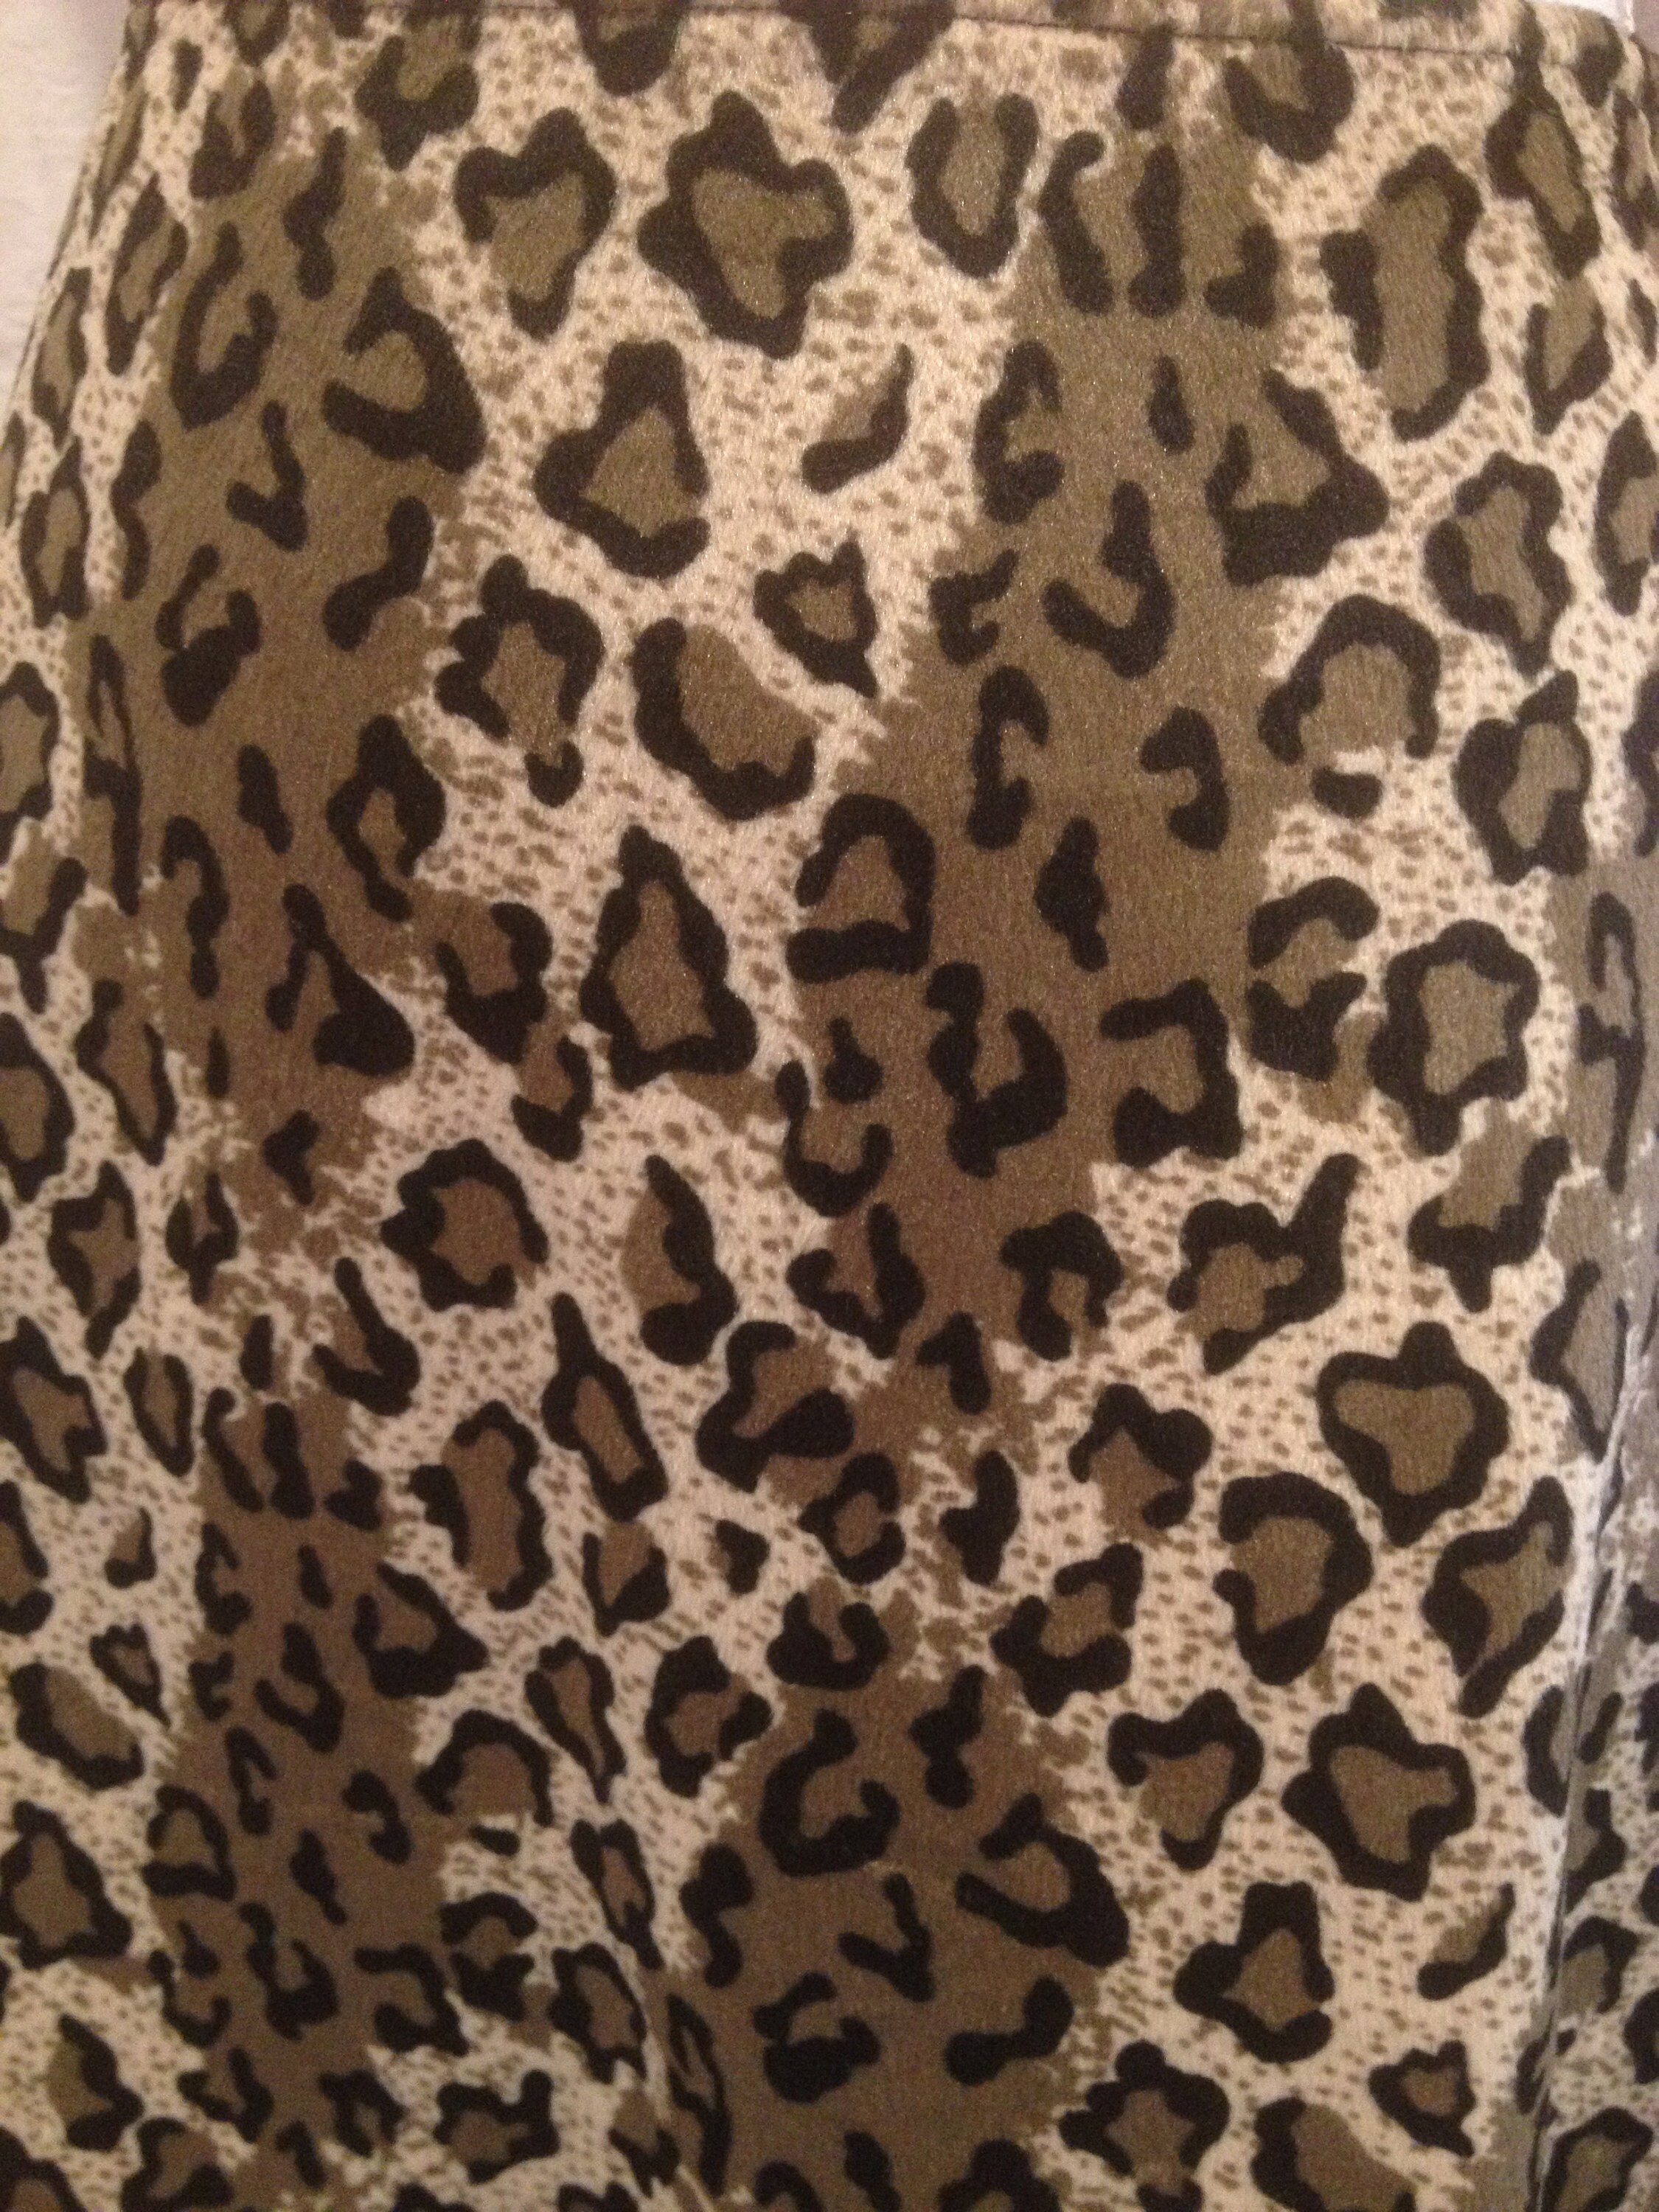 1990s Mini Mod Gogo 60s Style A Line Cheetah Print Fuzzy Skirt - Etsy